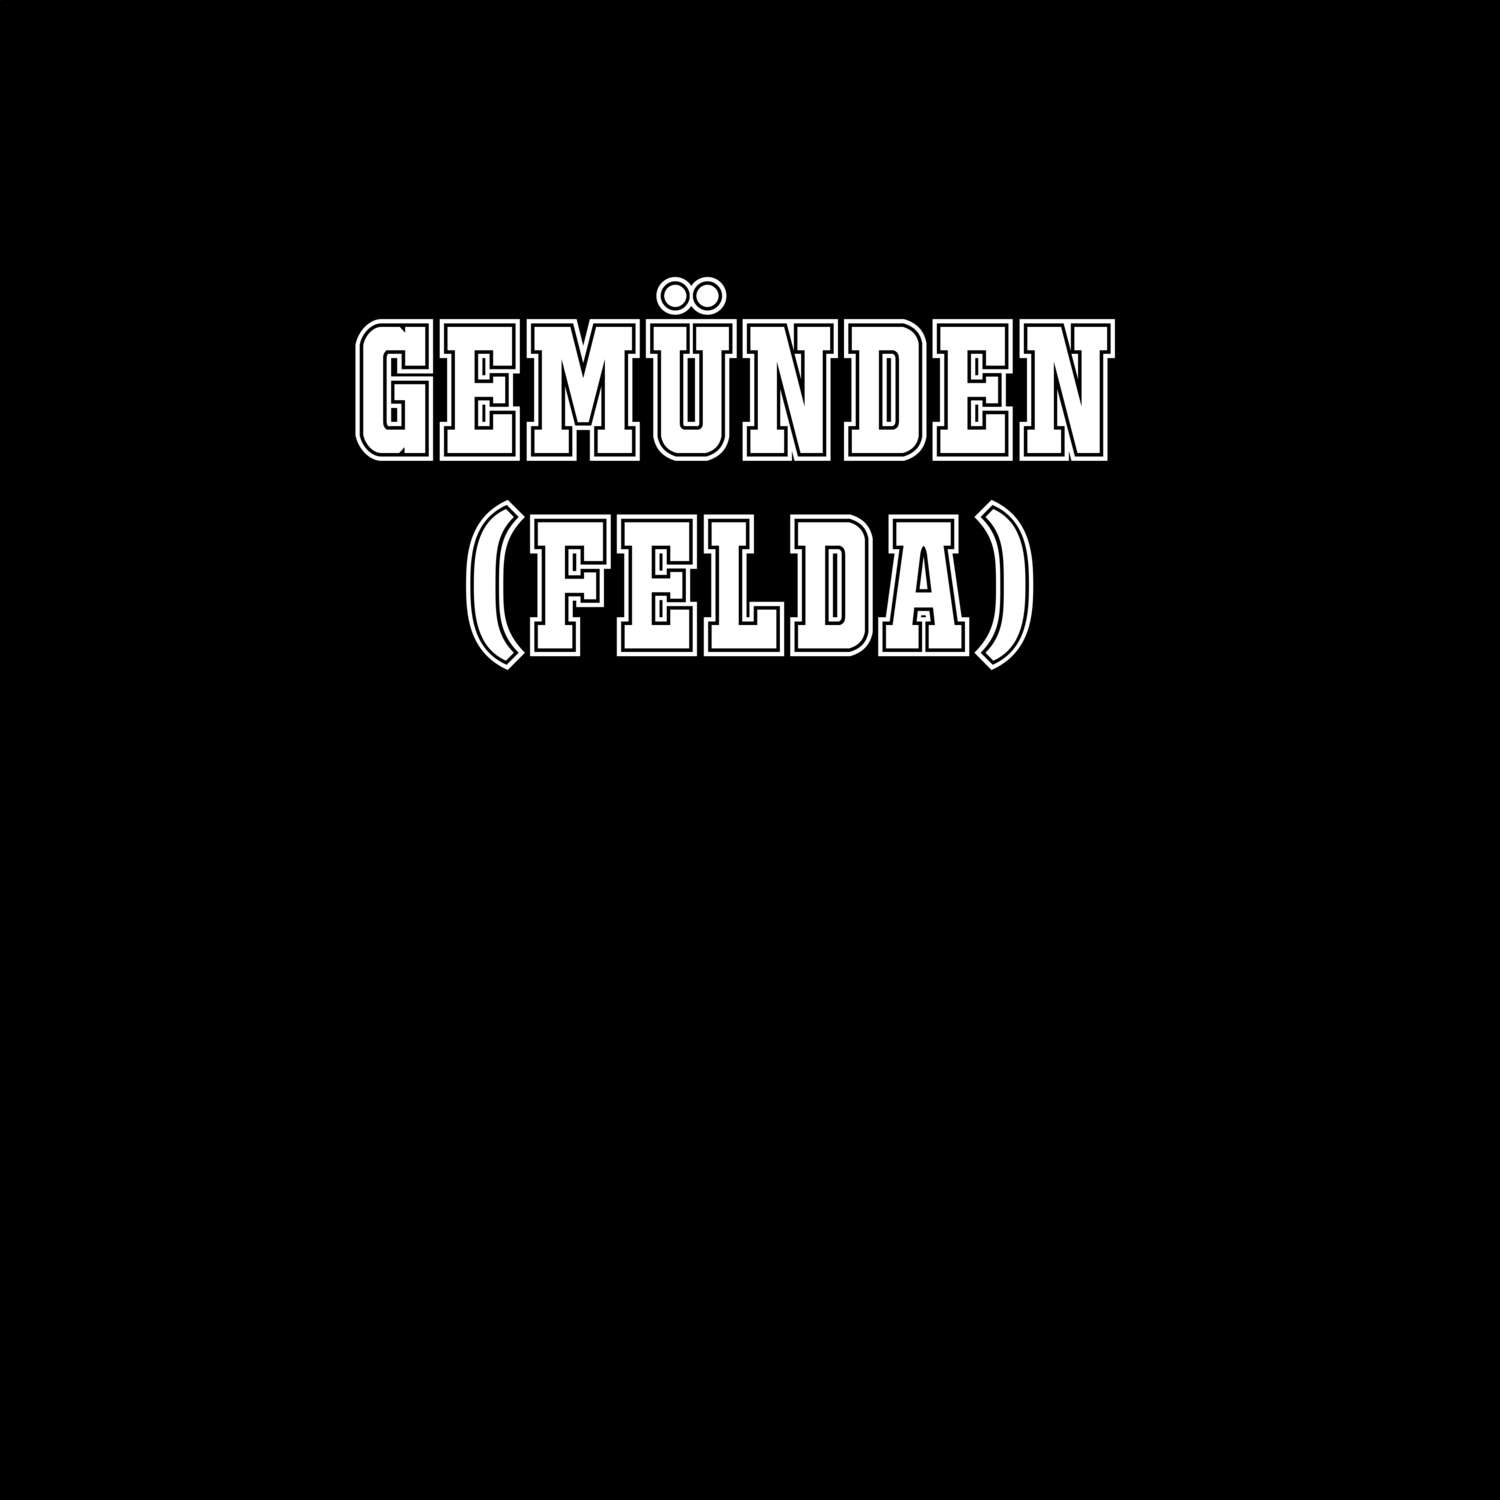 Gemünden (Felda) T-Shirt »Classic«